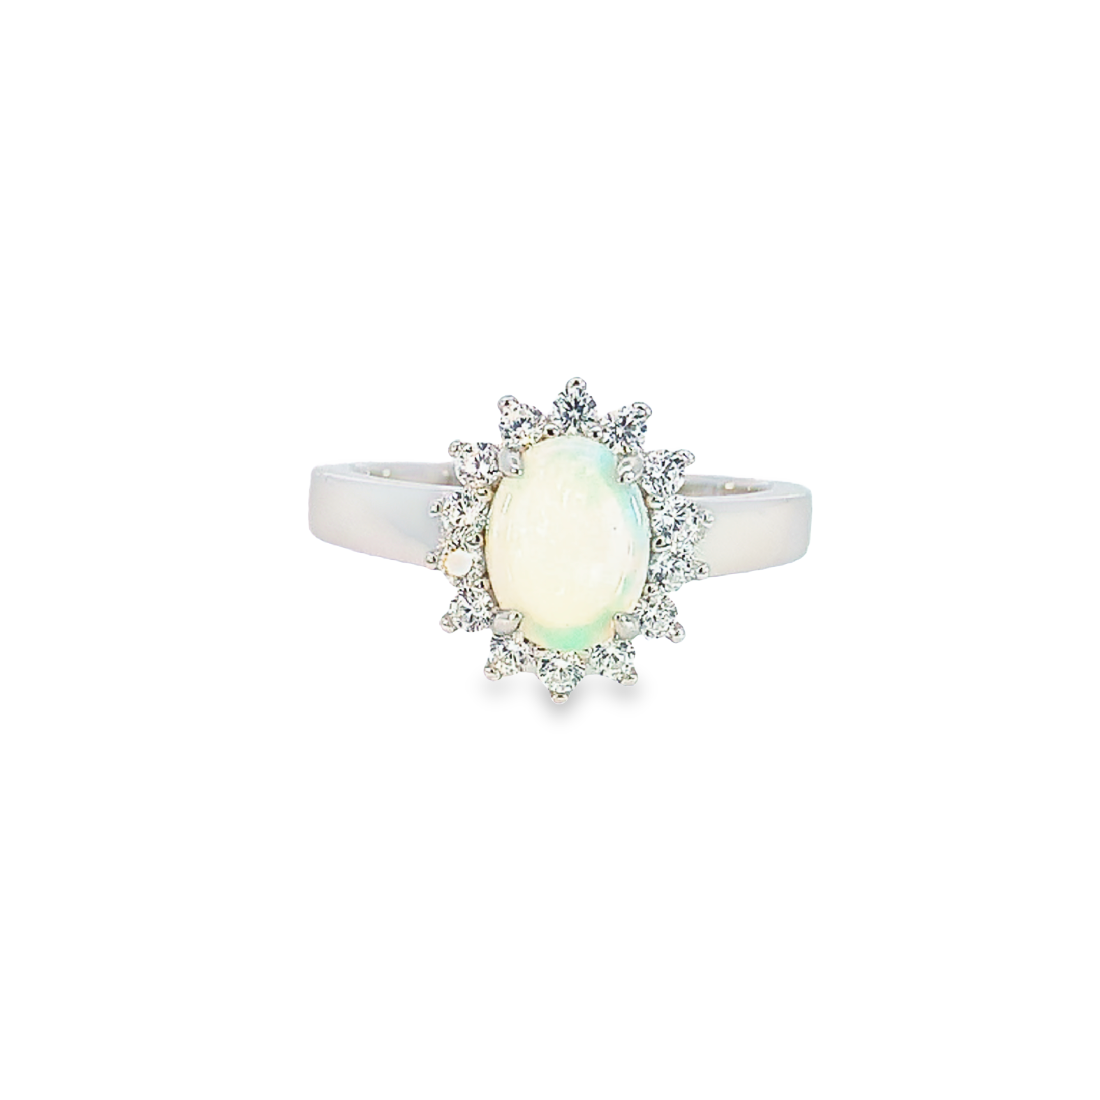 Sterling Silver White Opal cluster ring 8x6mm - Masterpiece Jewellery Opal & Gems Sydney Australia | Online Shop